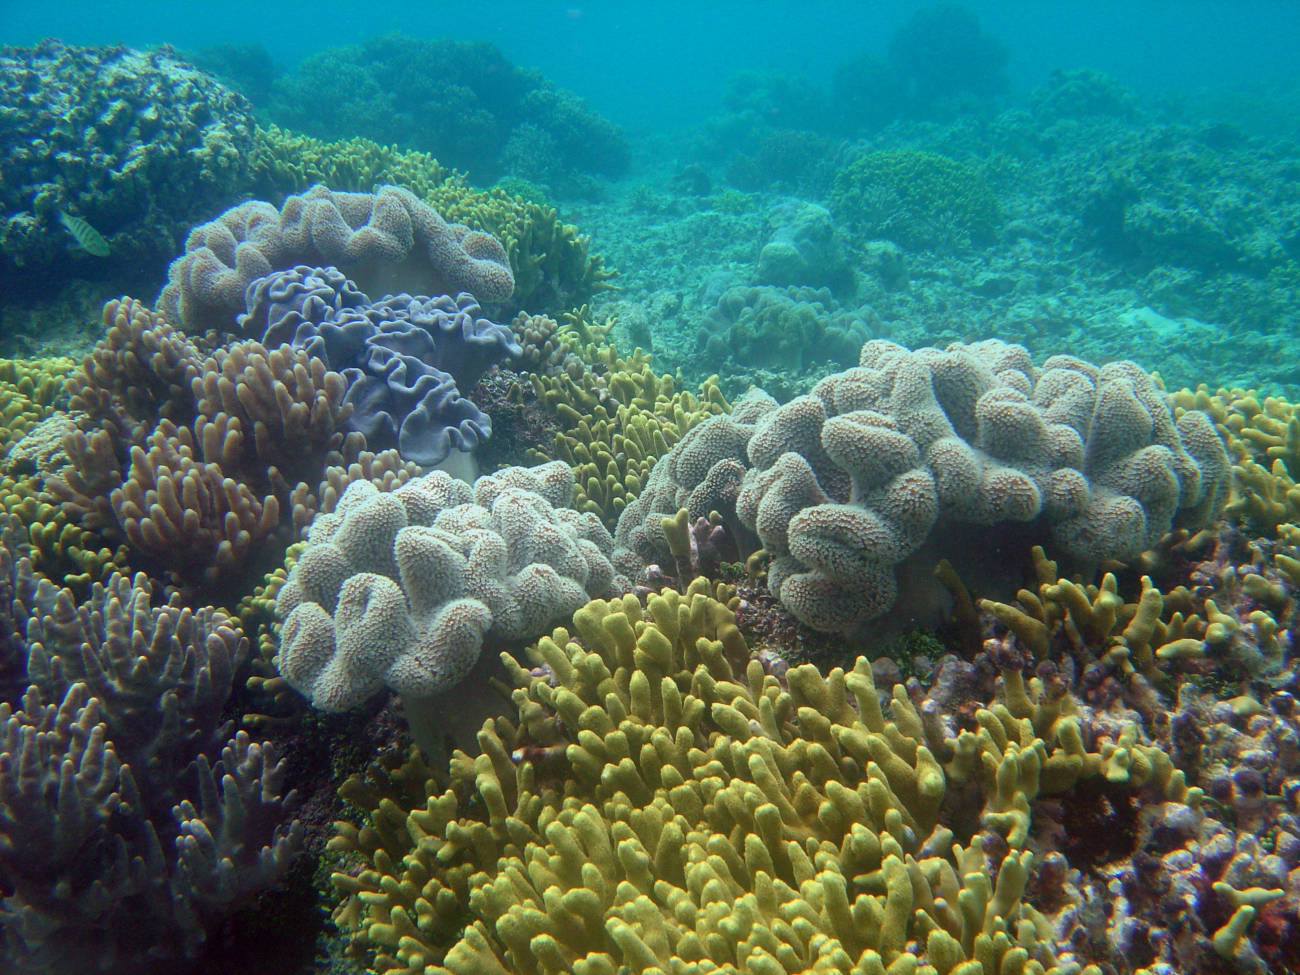 Beautiful multi-colored coral reef scene